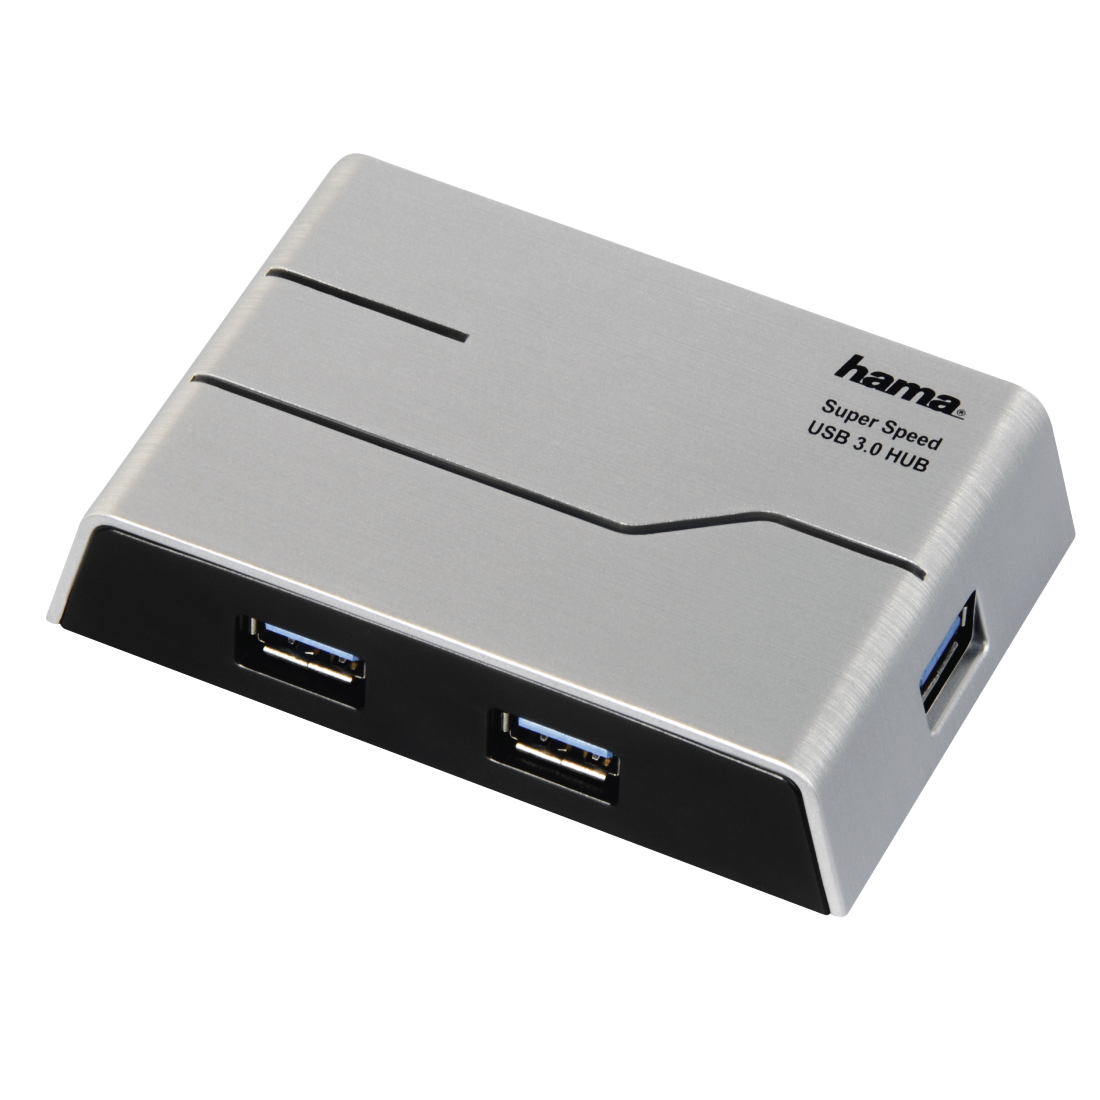 Hama USB 3.0 Hub 1:4, with power supply, silver/black